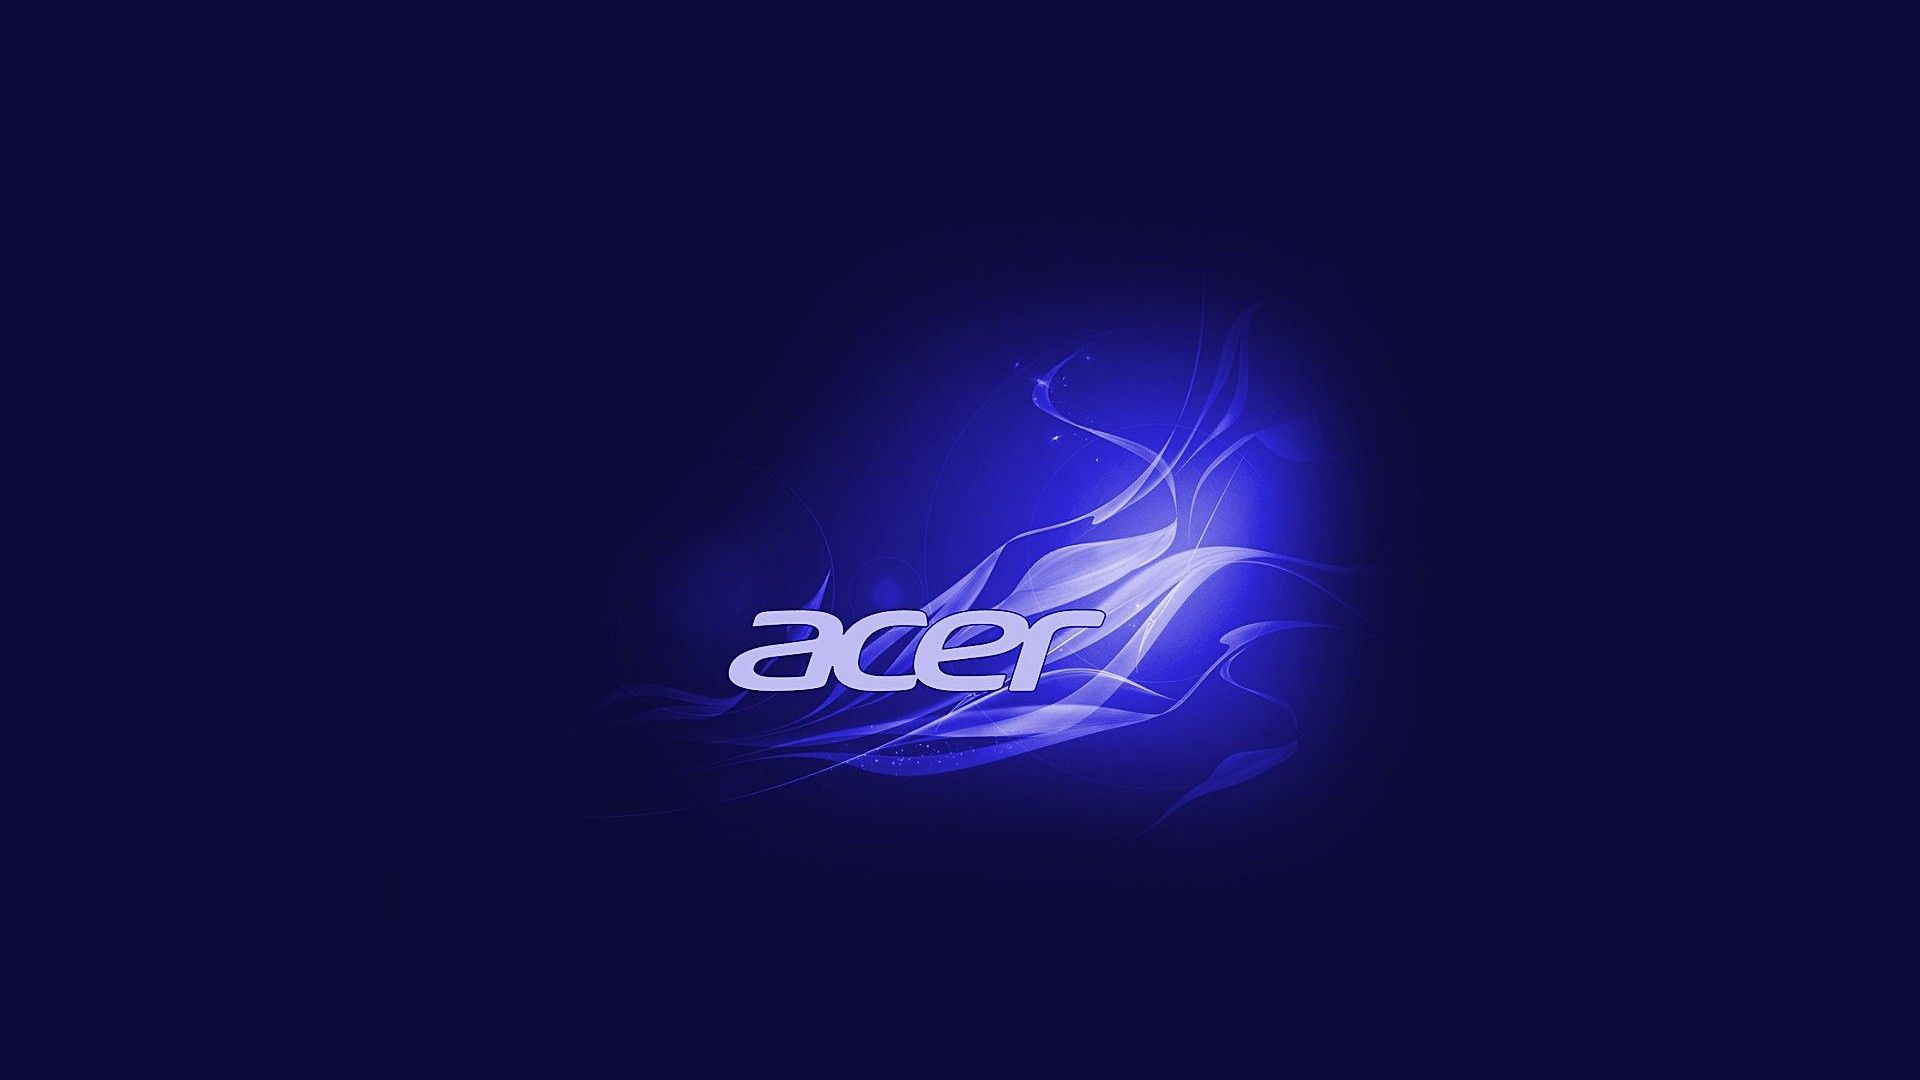 Acer blue logo wallpaper 1920x1080 (1080p) - Wallpaper - Wallpaper ...